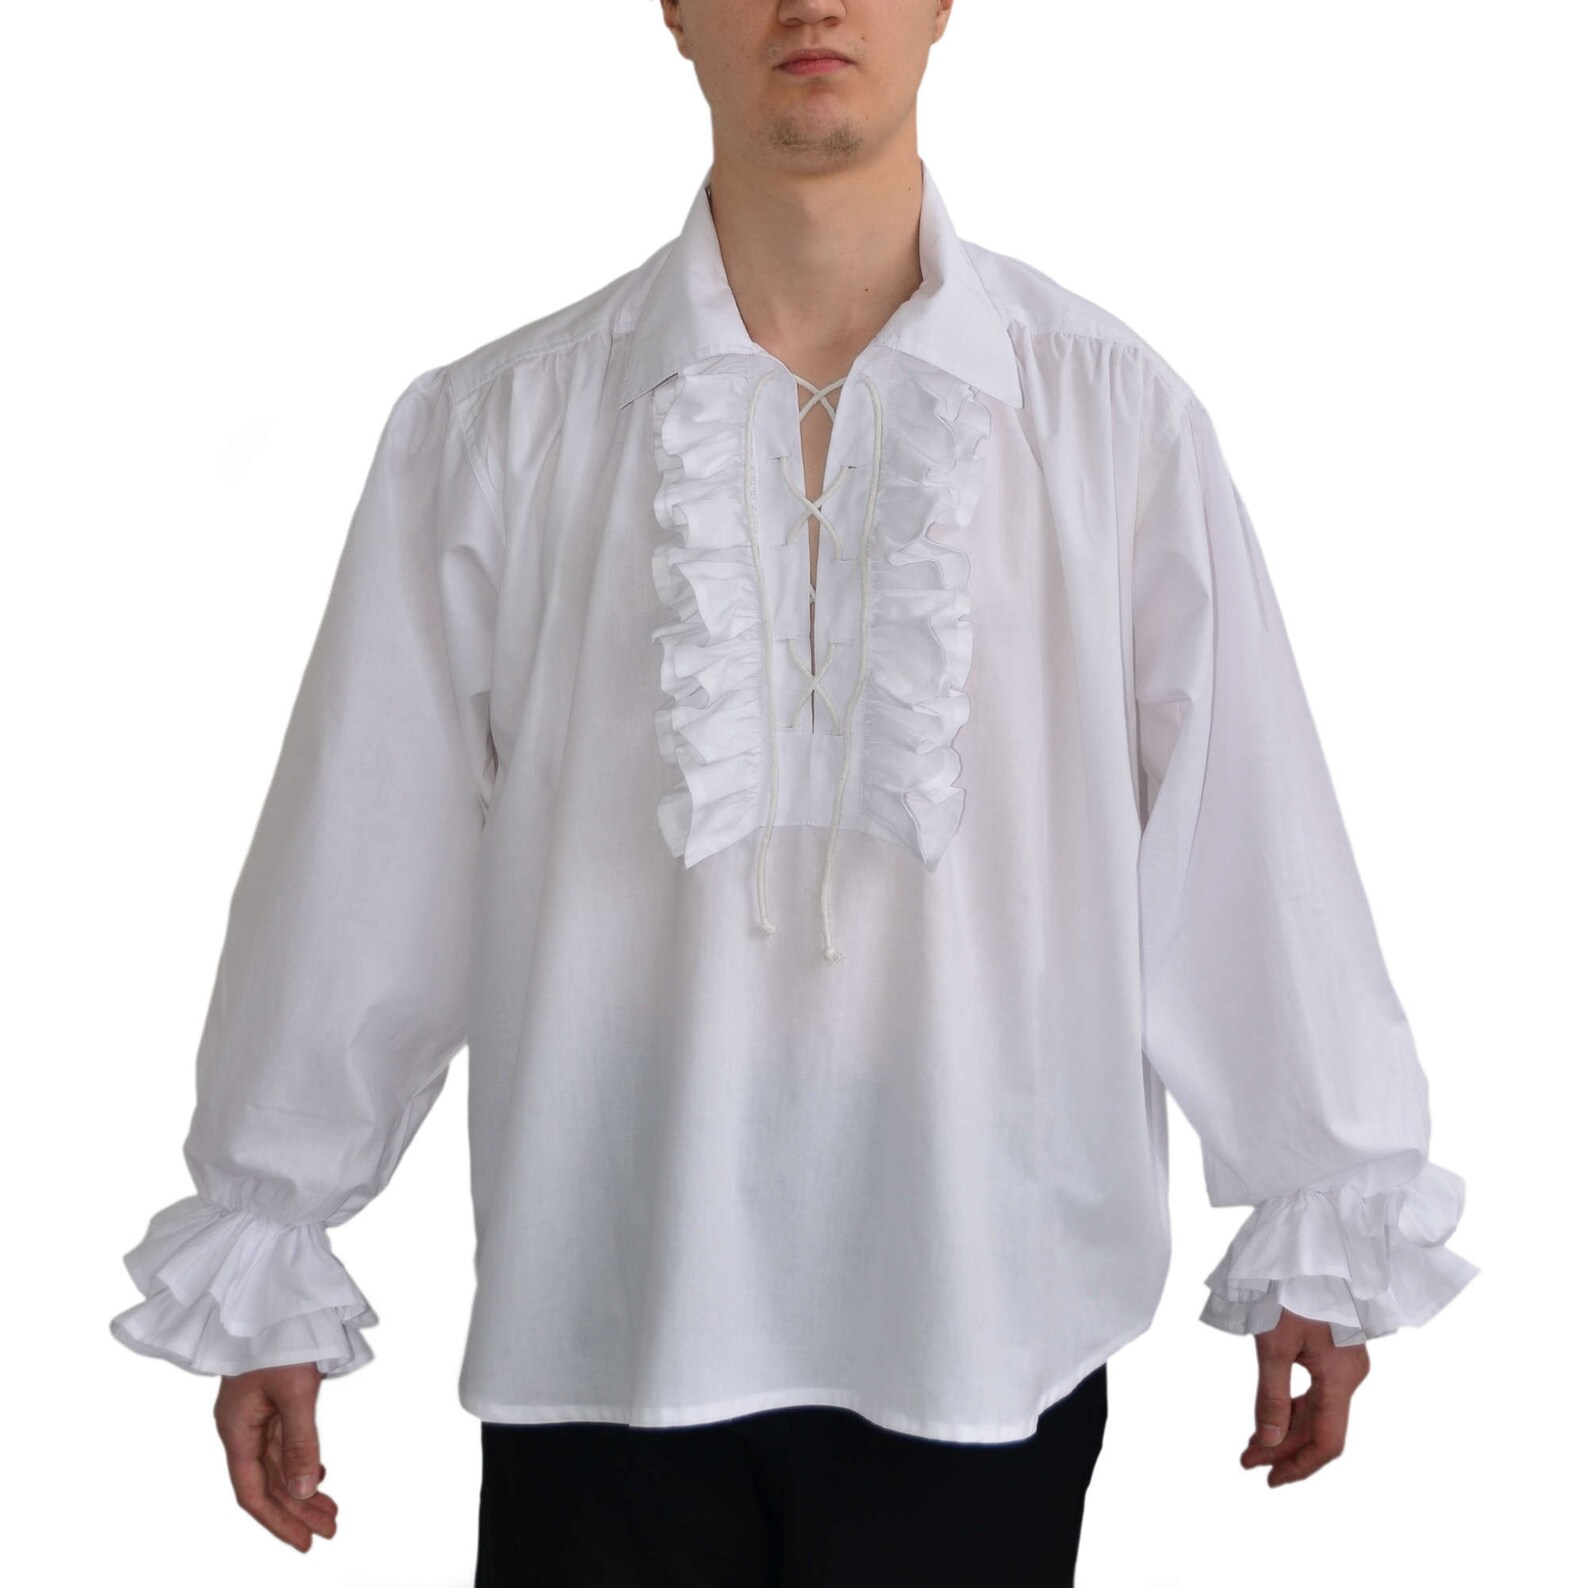 Medieval Ruffled Shirt Isenhart Cotton White Black HEMAD - Etsy